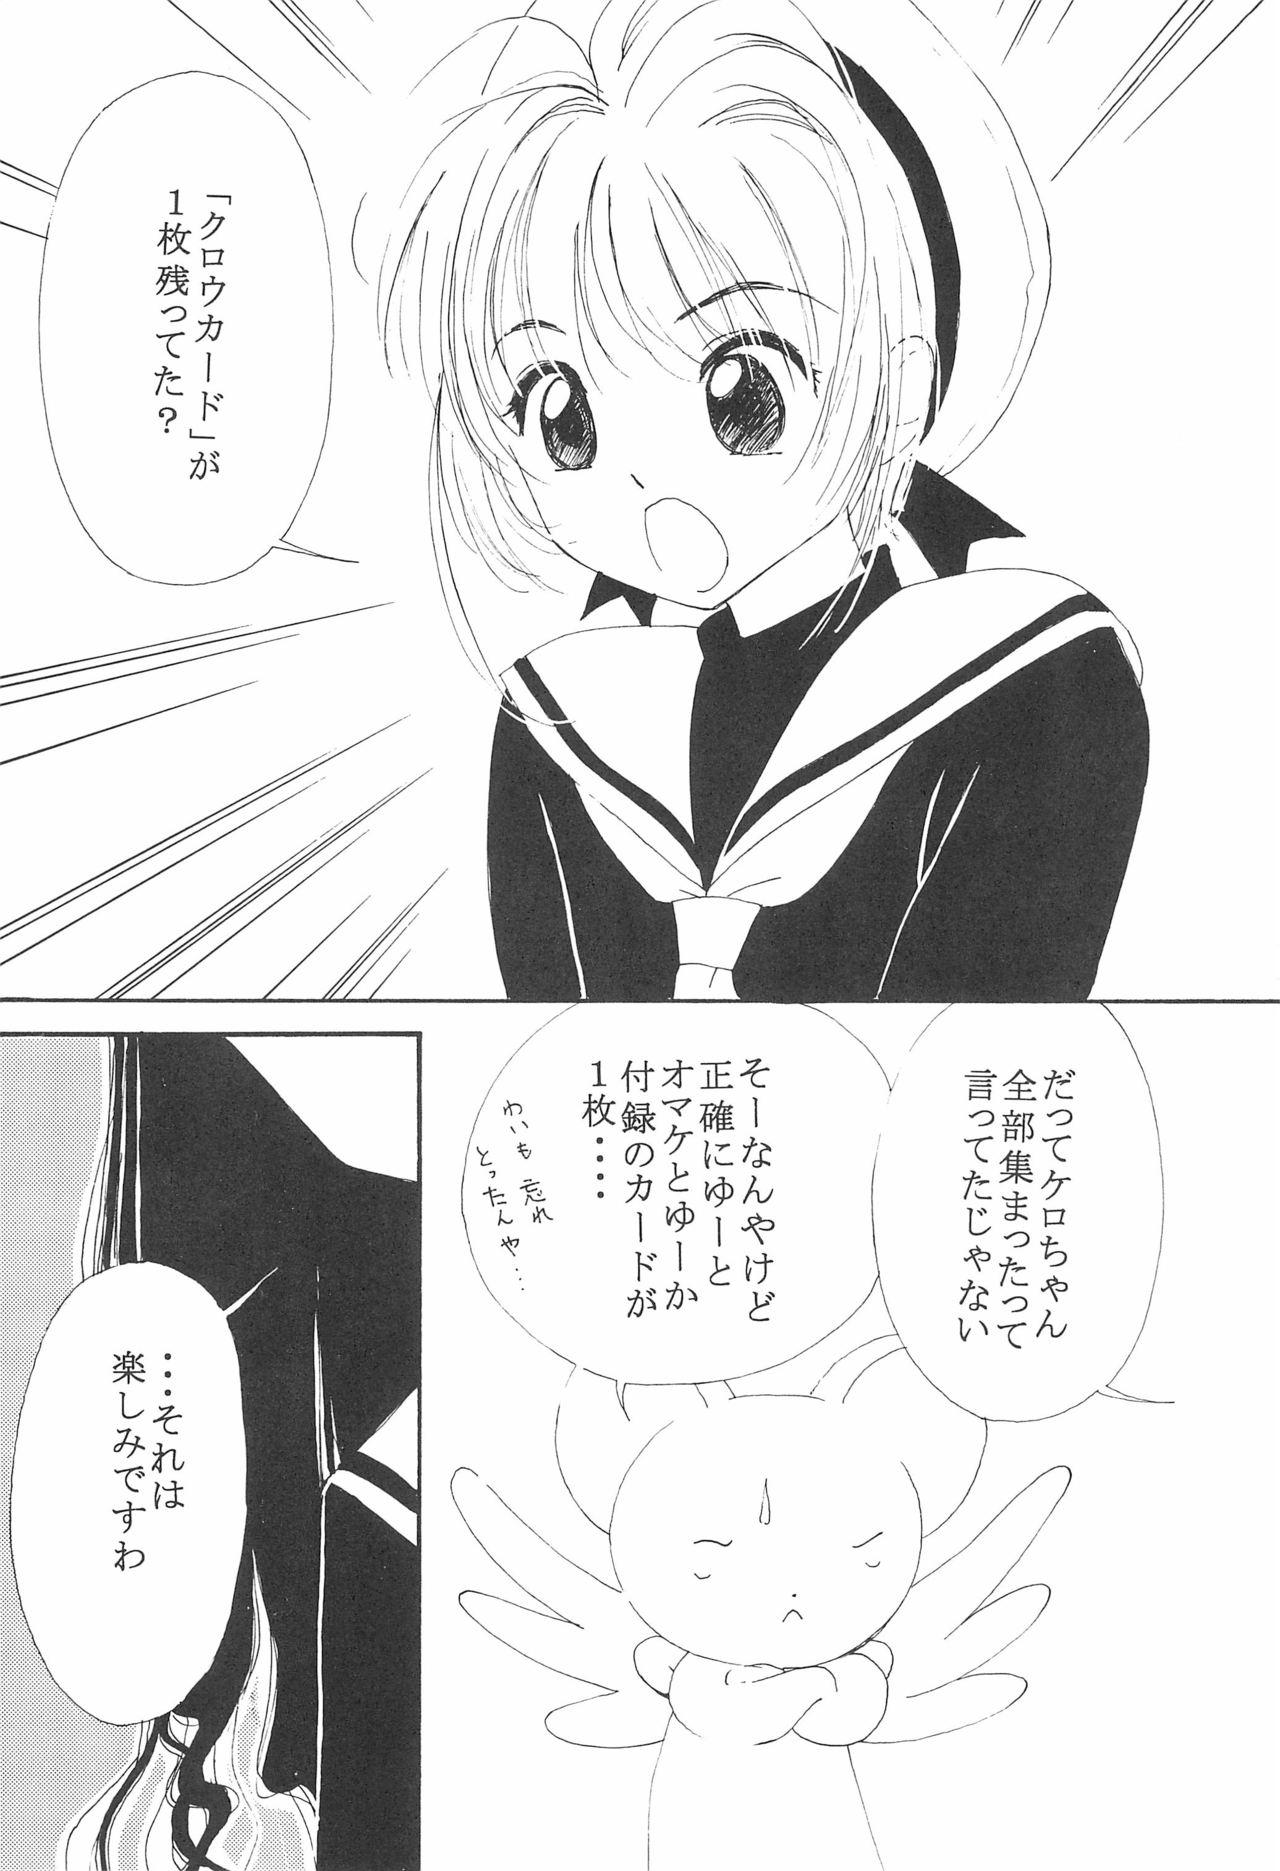 Milk MoMo no Yu 8 - Cardcaptor sakura Pendeja - Page 5